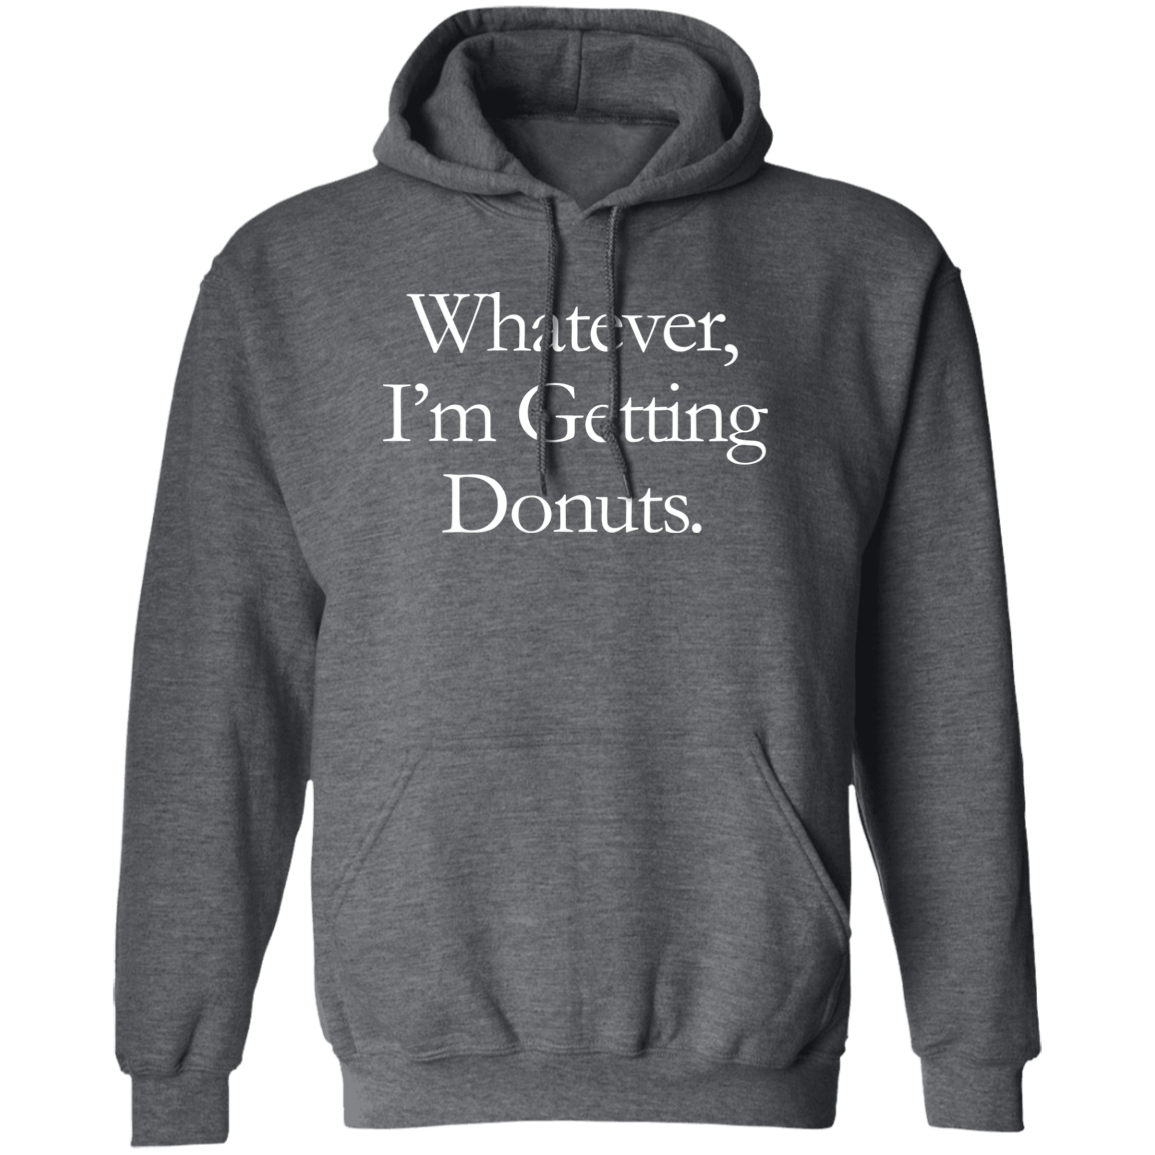 Whatever, I'm Getting Donuts Hoodie